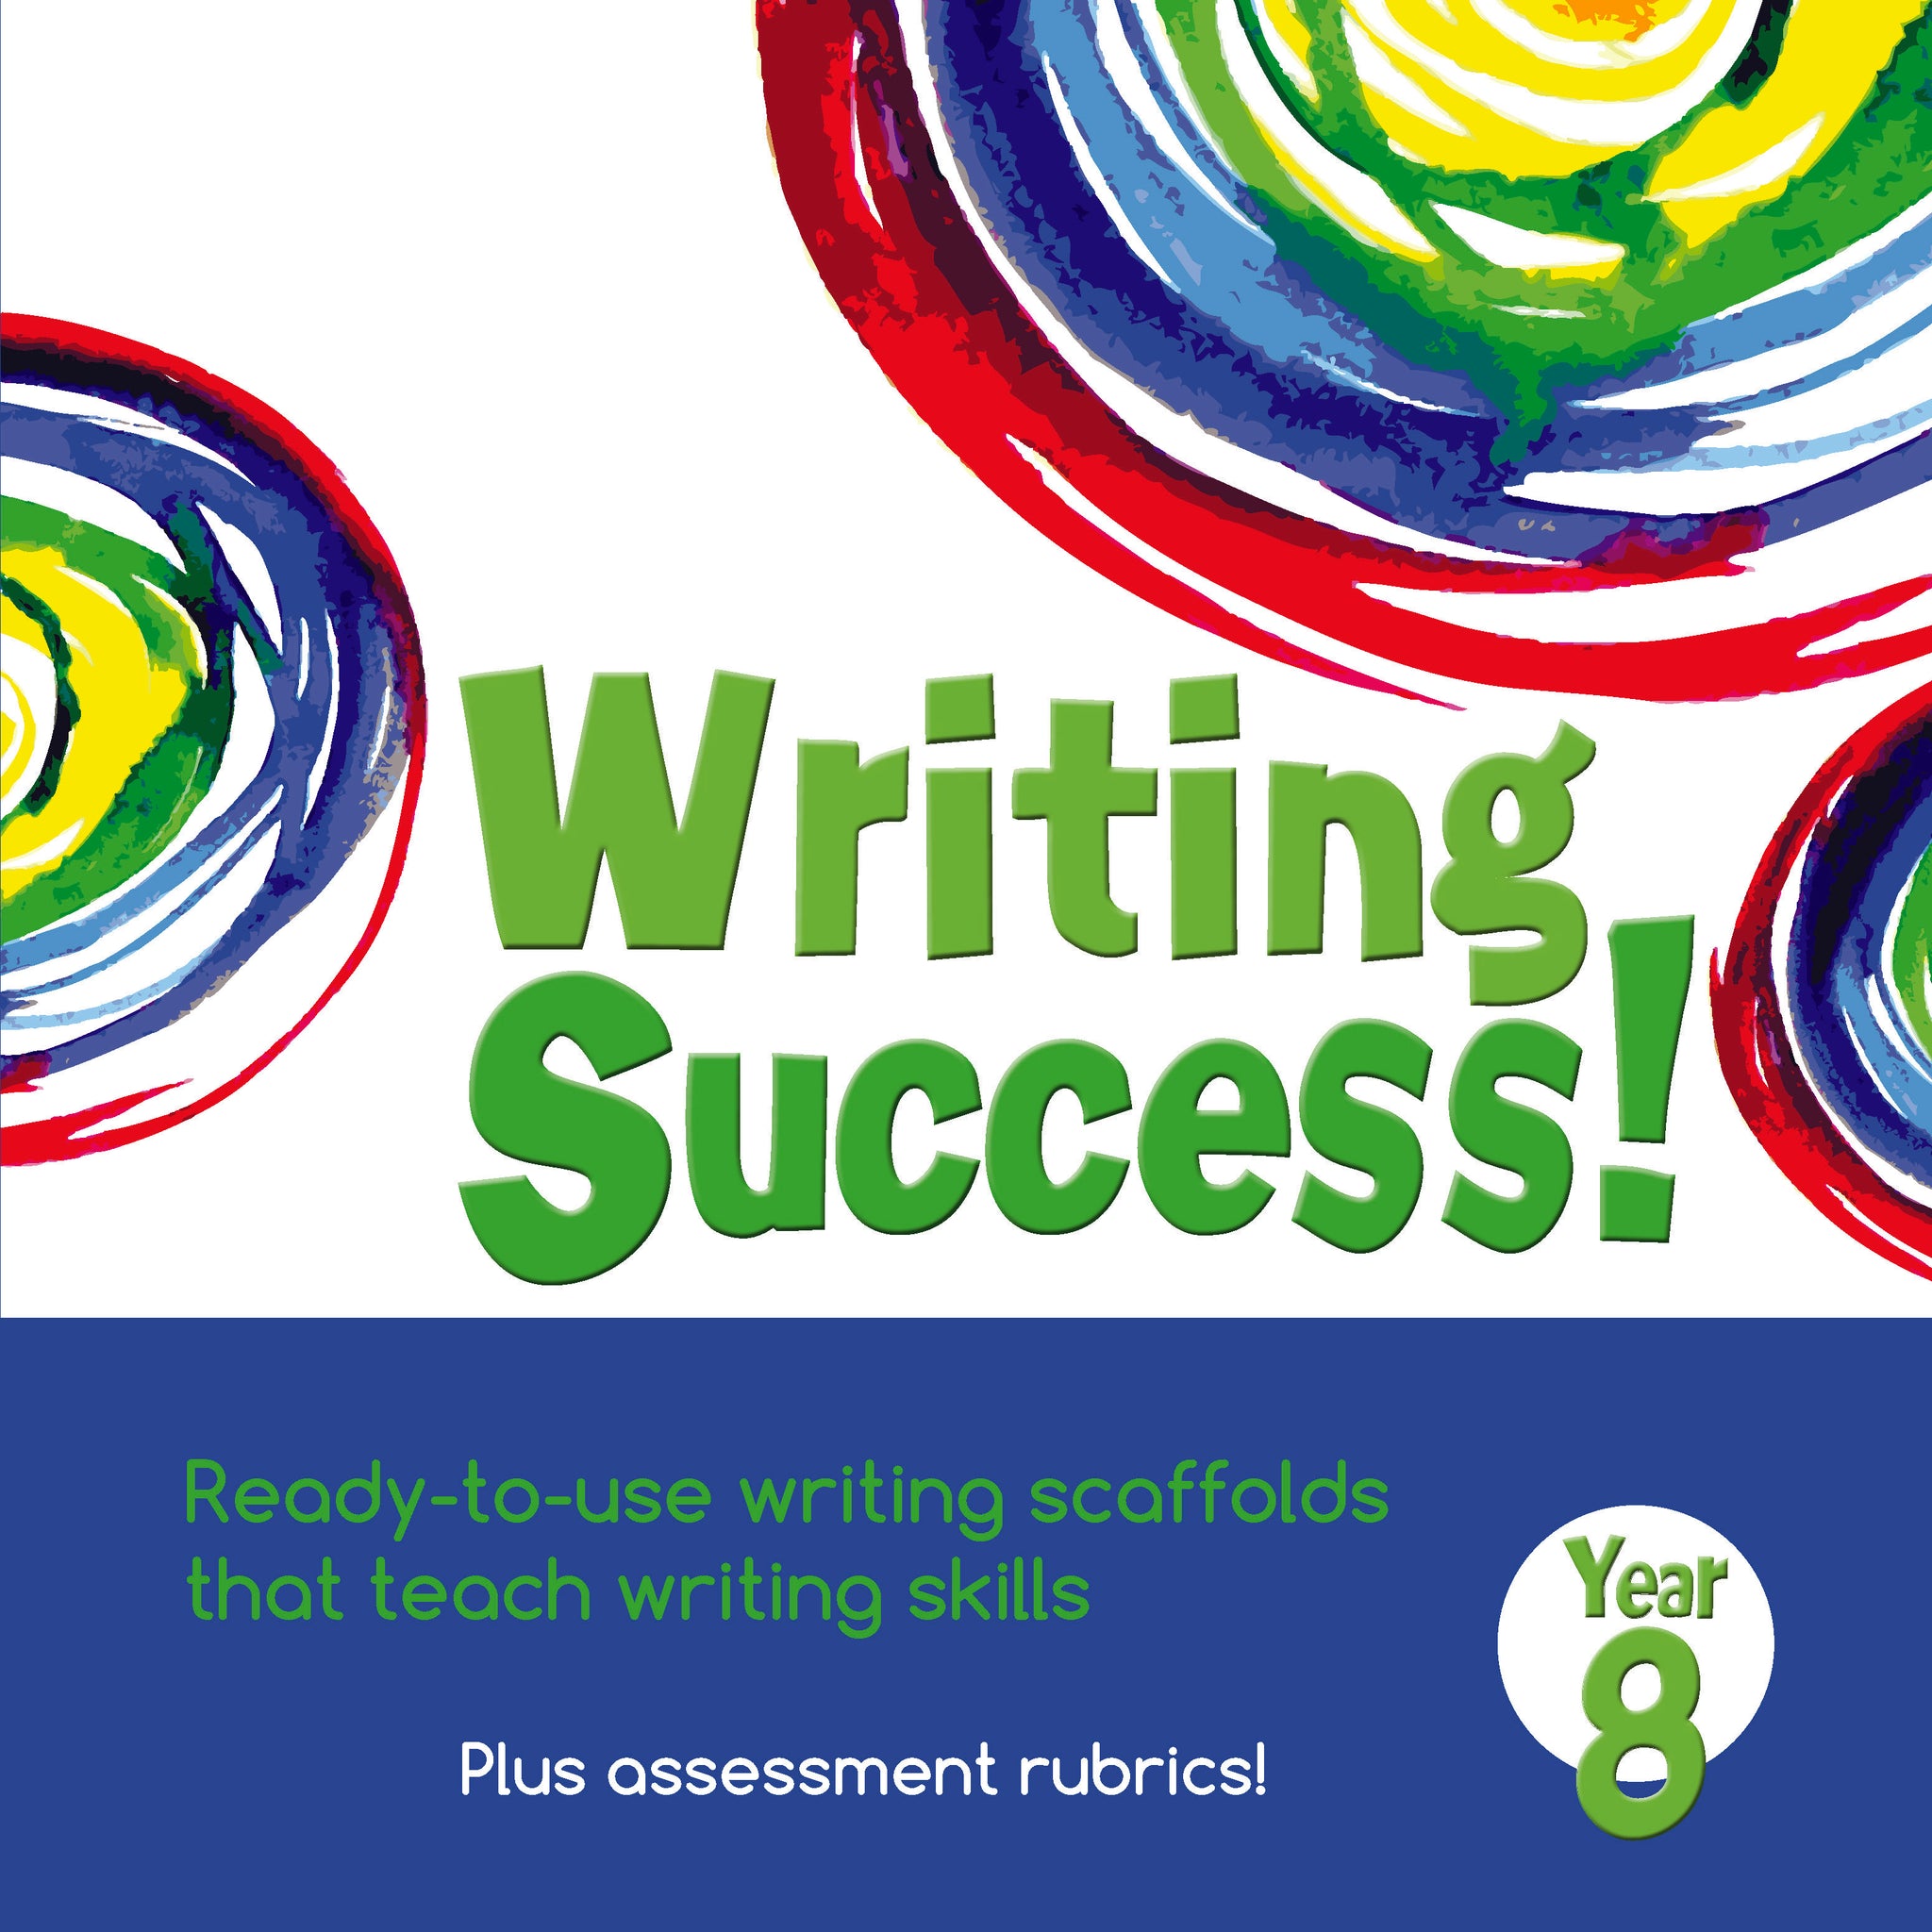 Writing Success! Year 8